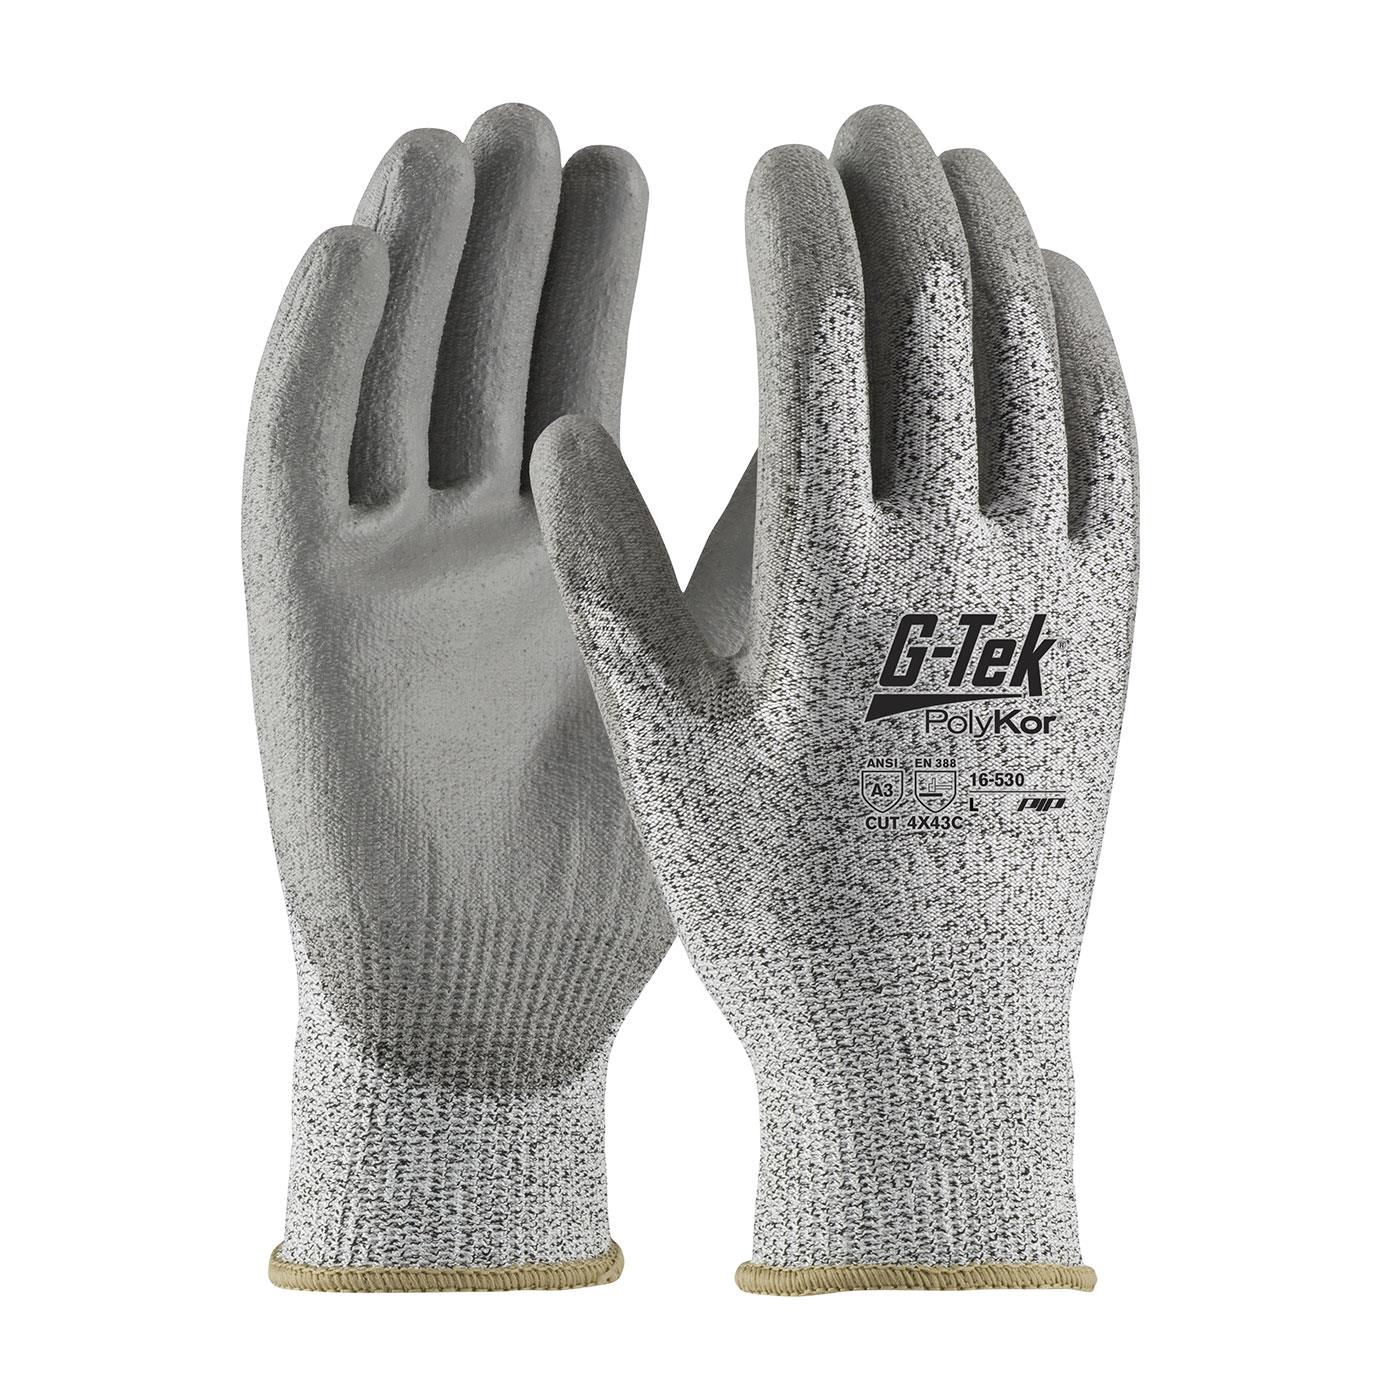 G-TEK POLYKOR 16-530 PU PALM COATED - Cut Resistant Gloves